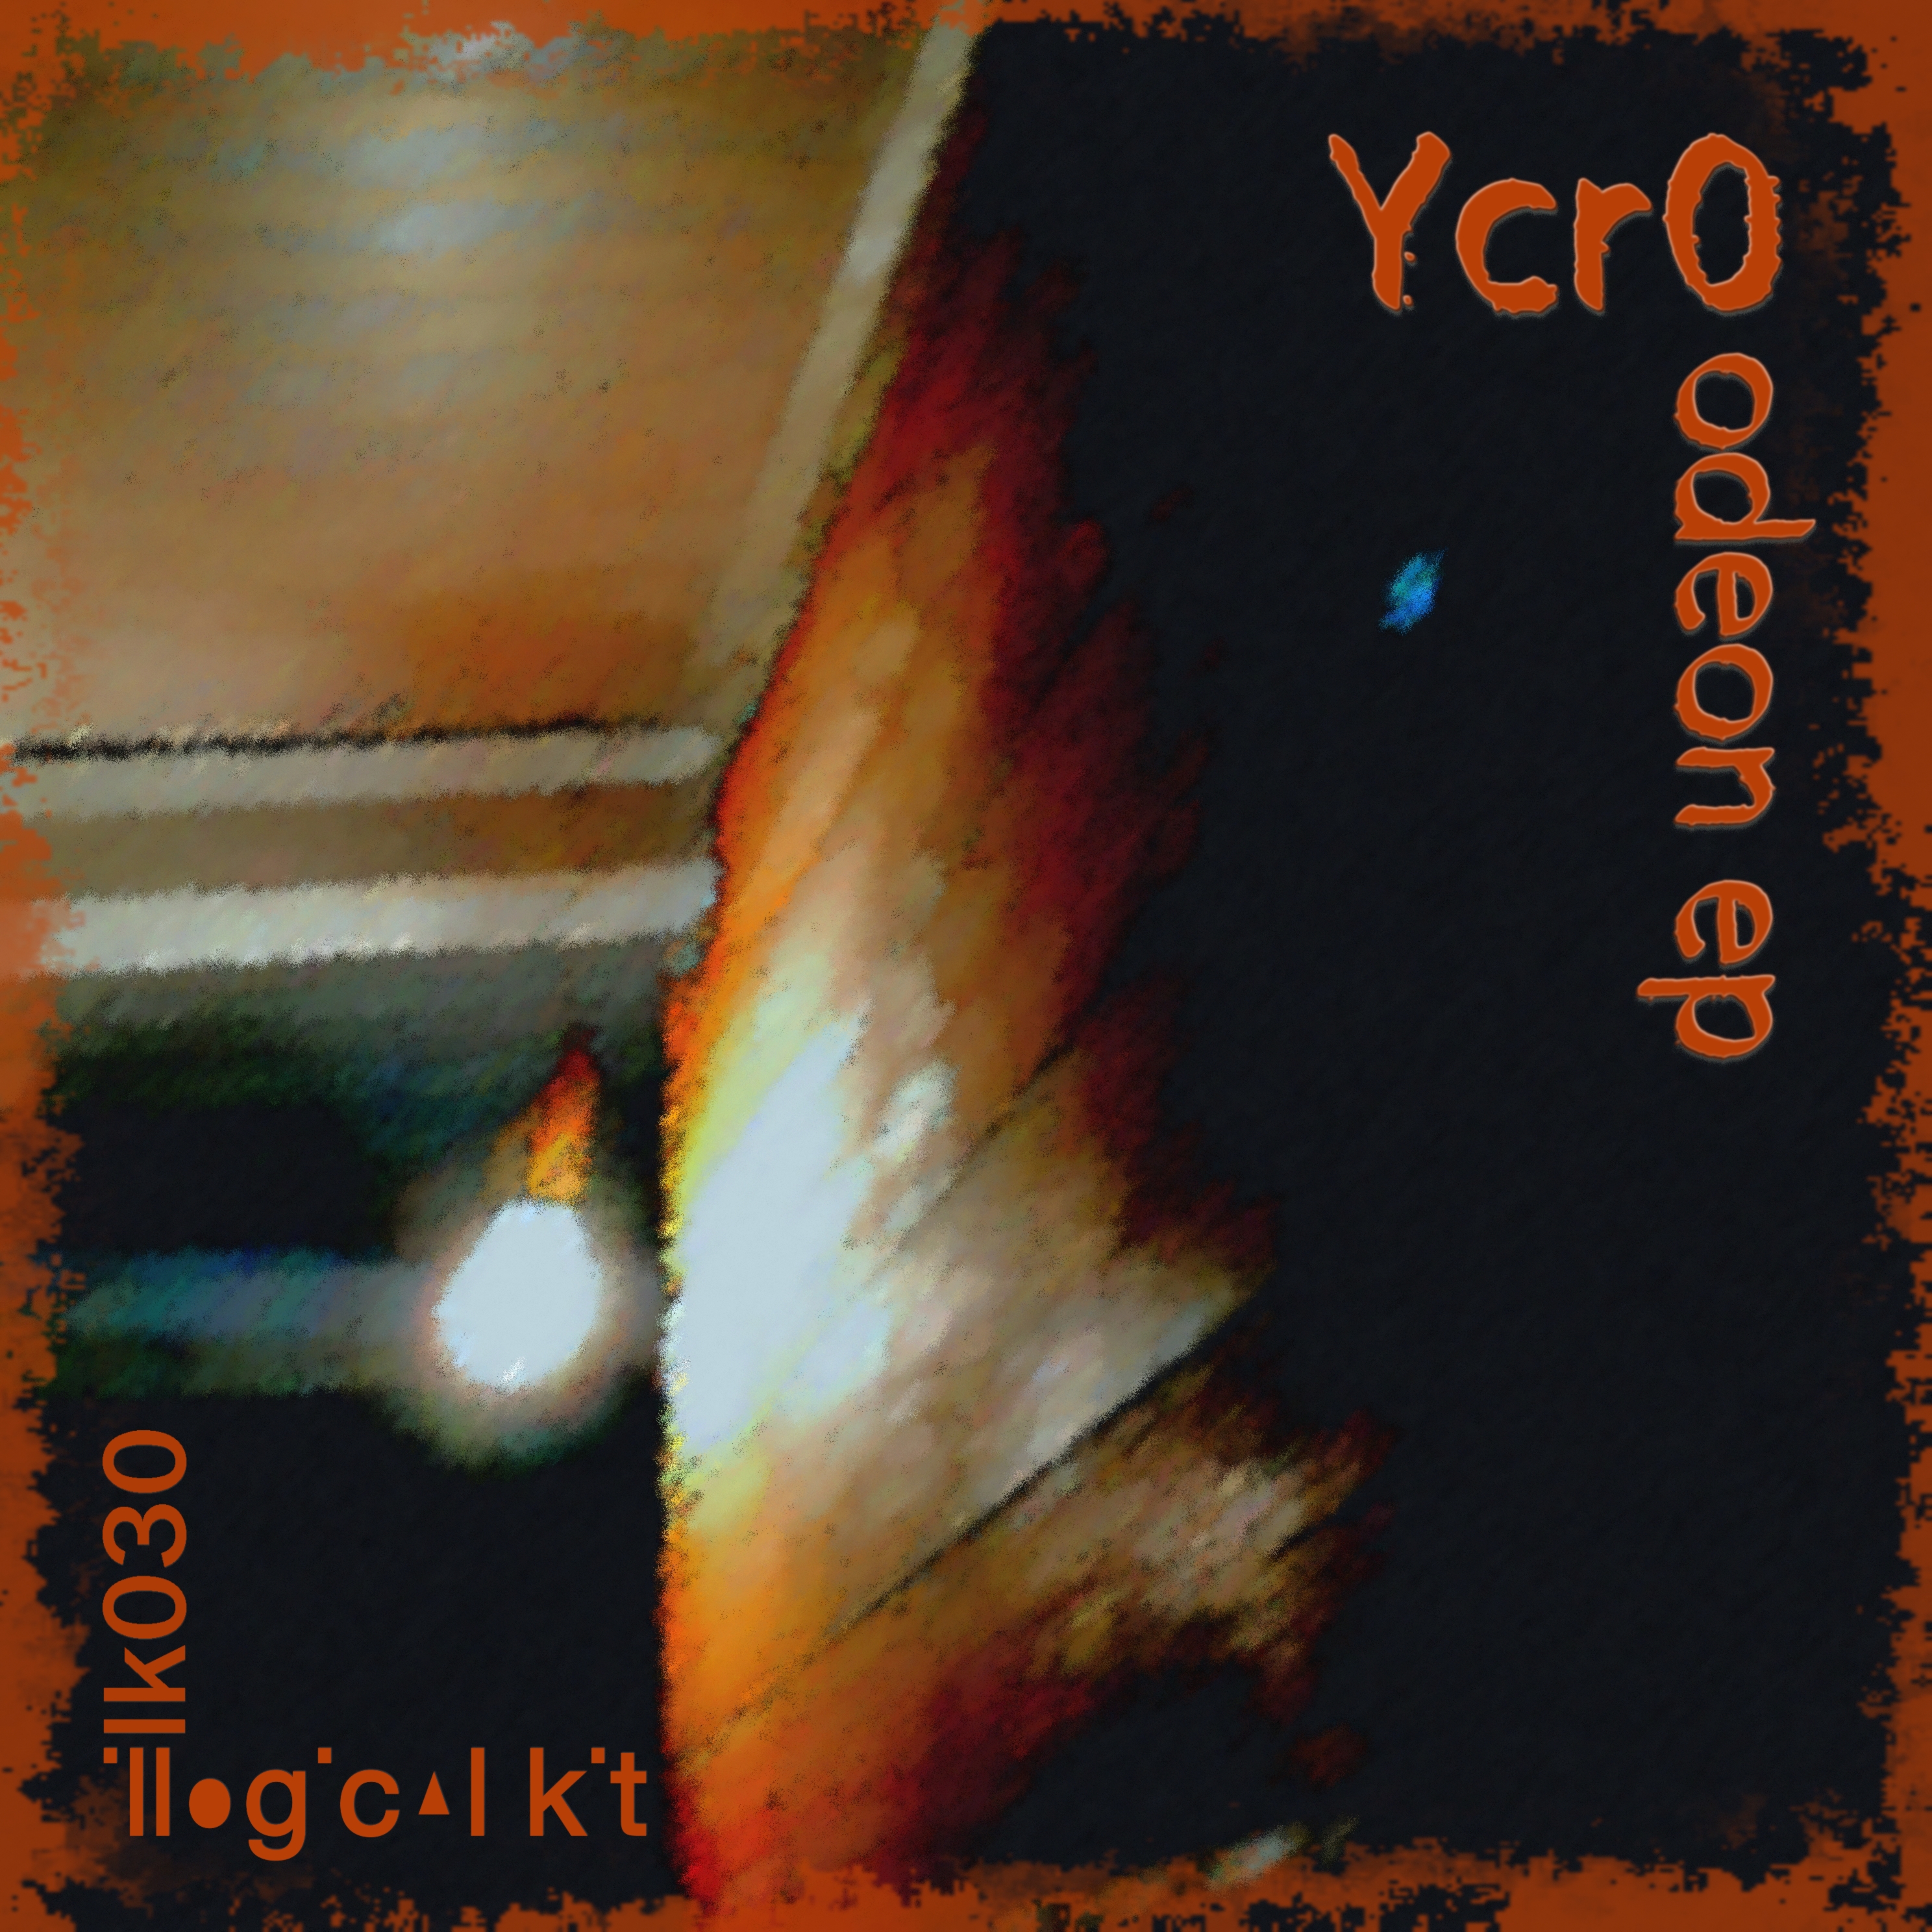 Ycr0 – odeon